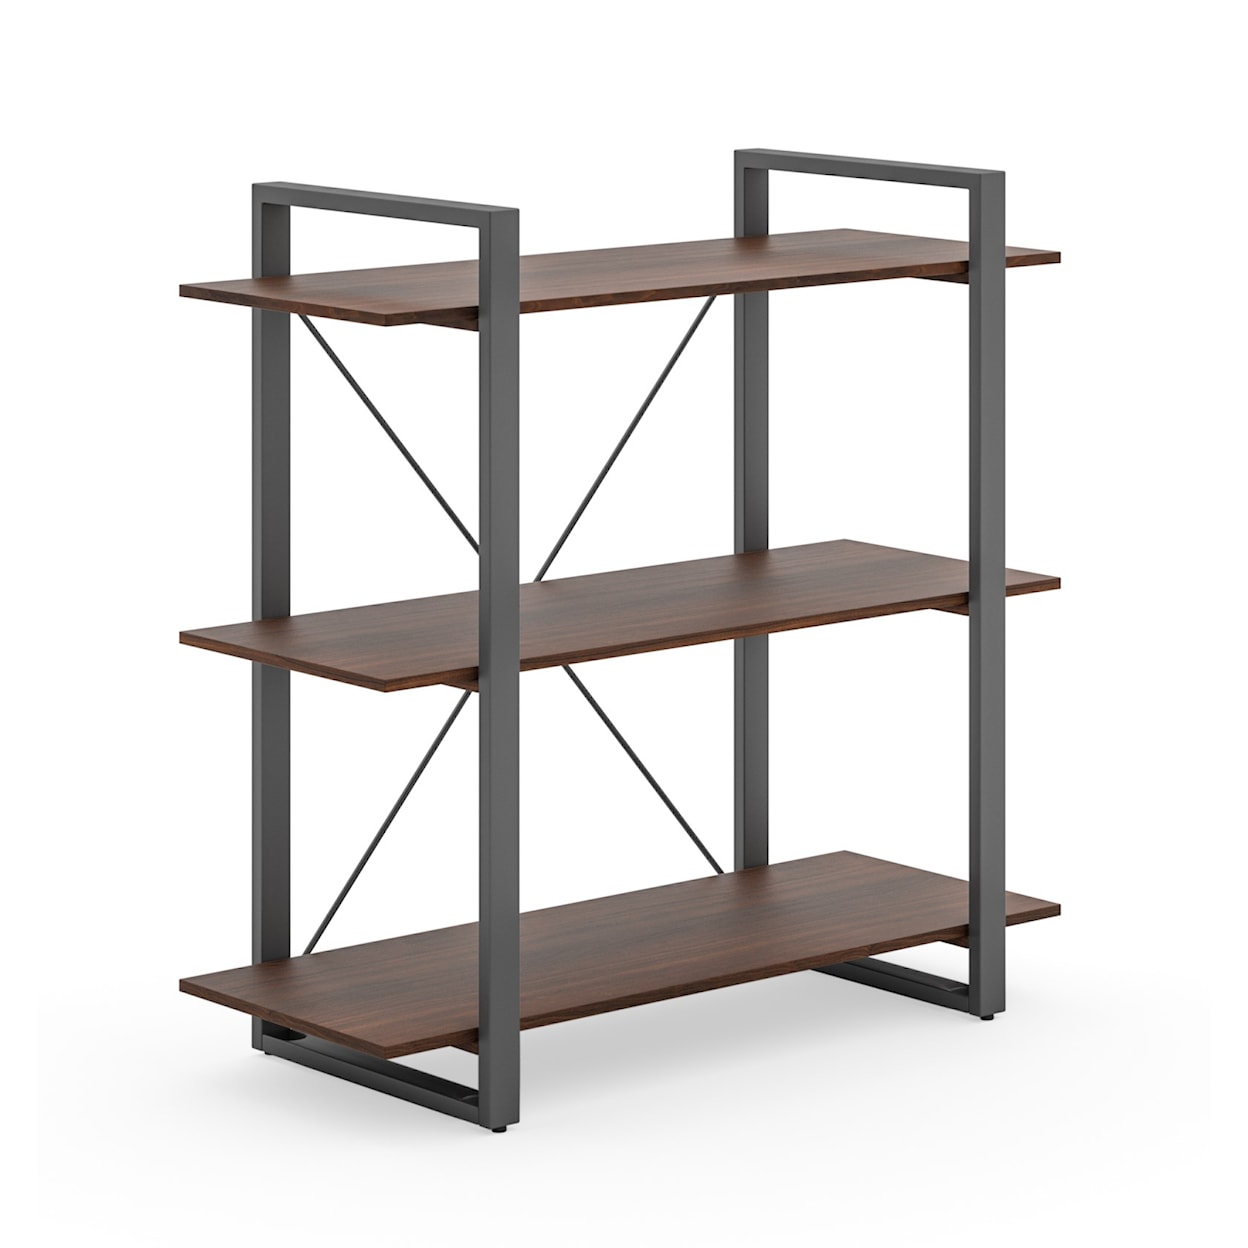 homestyles Merge 3-Shelf Bookcase